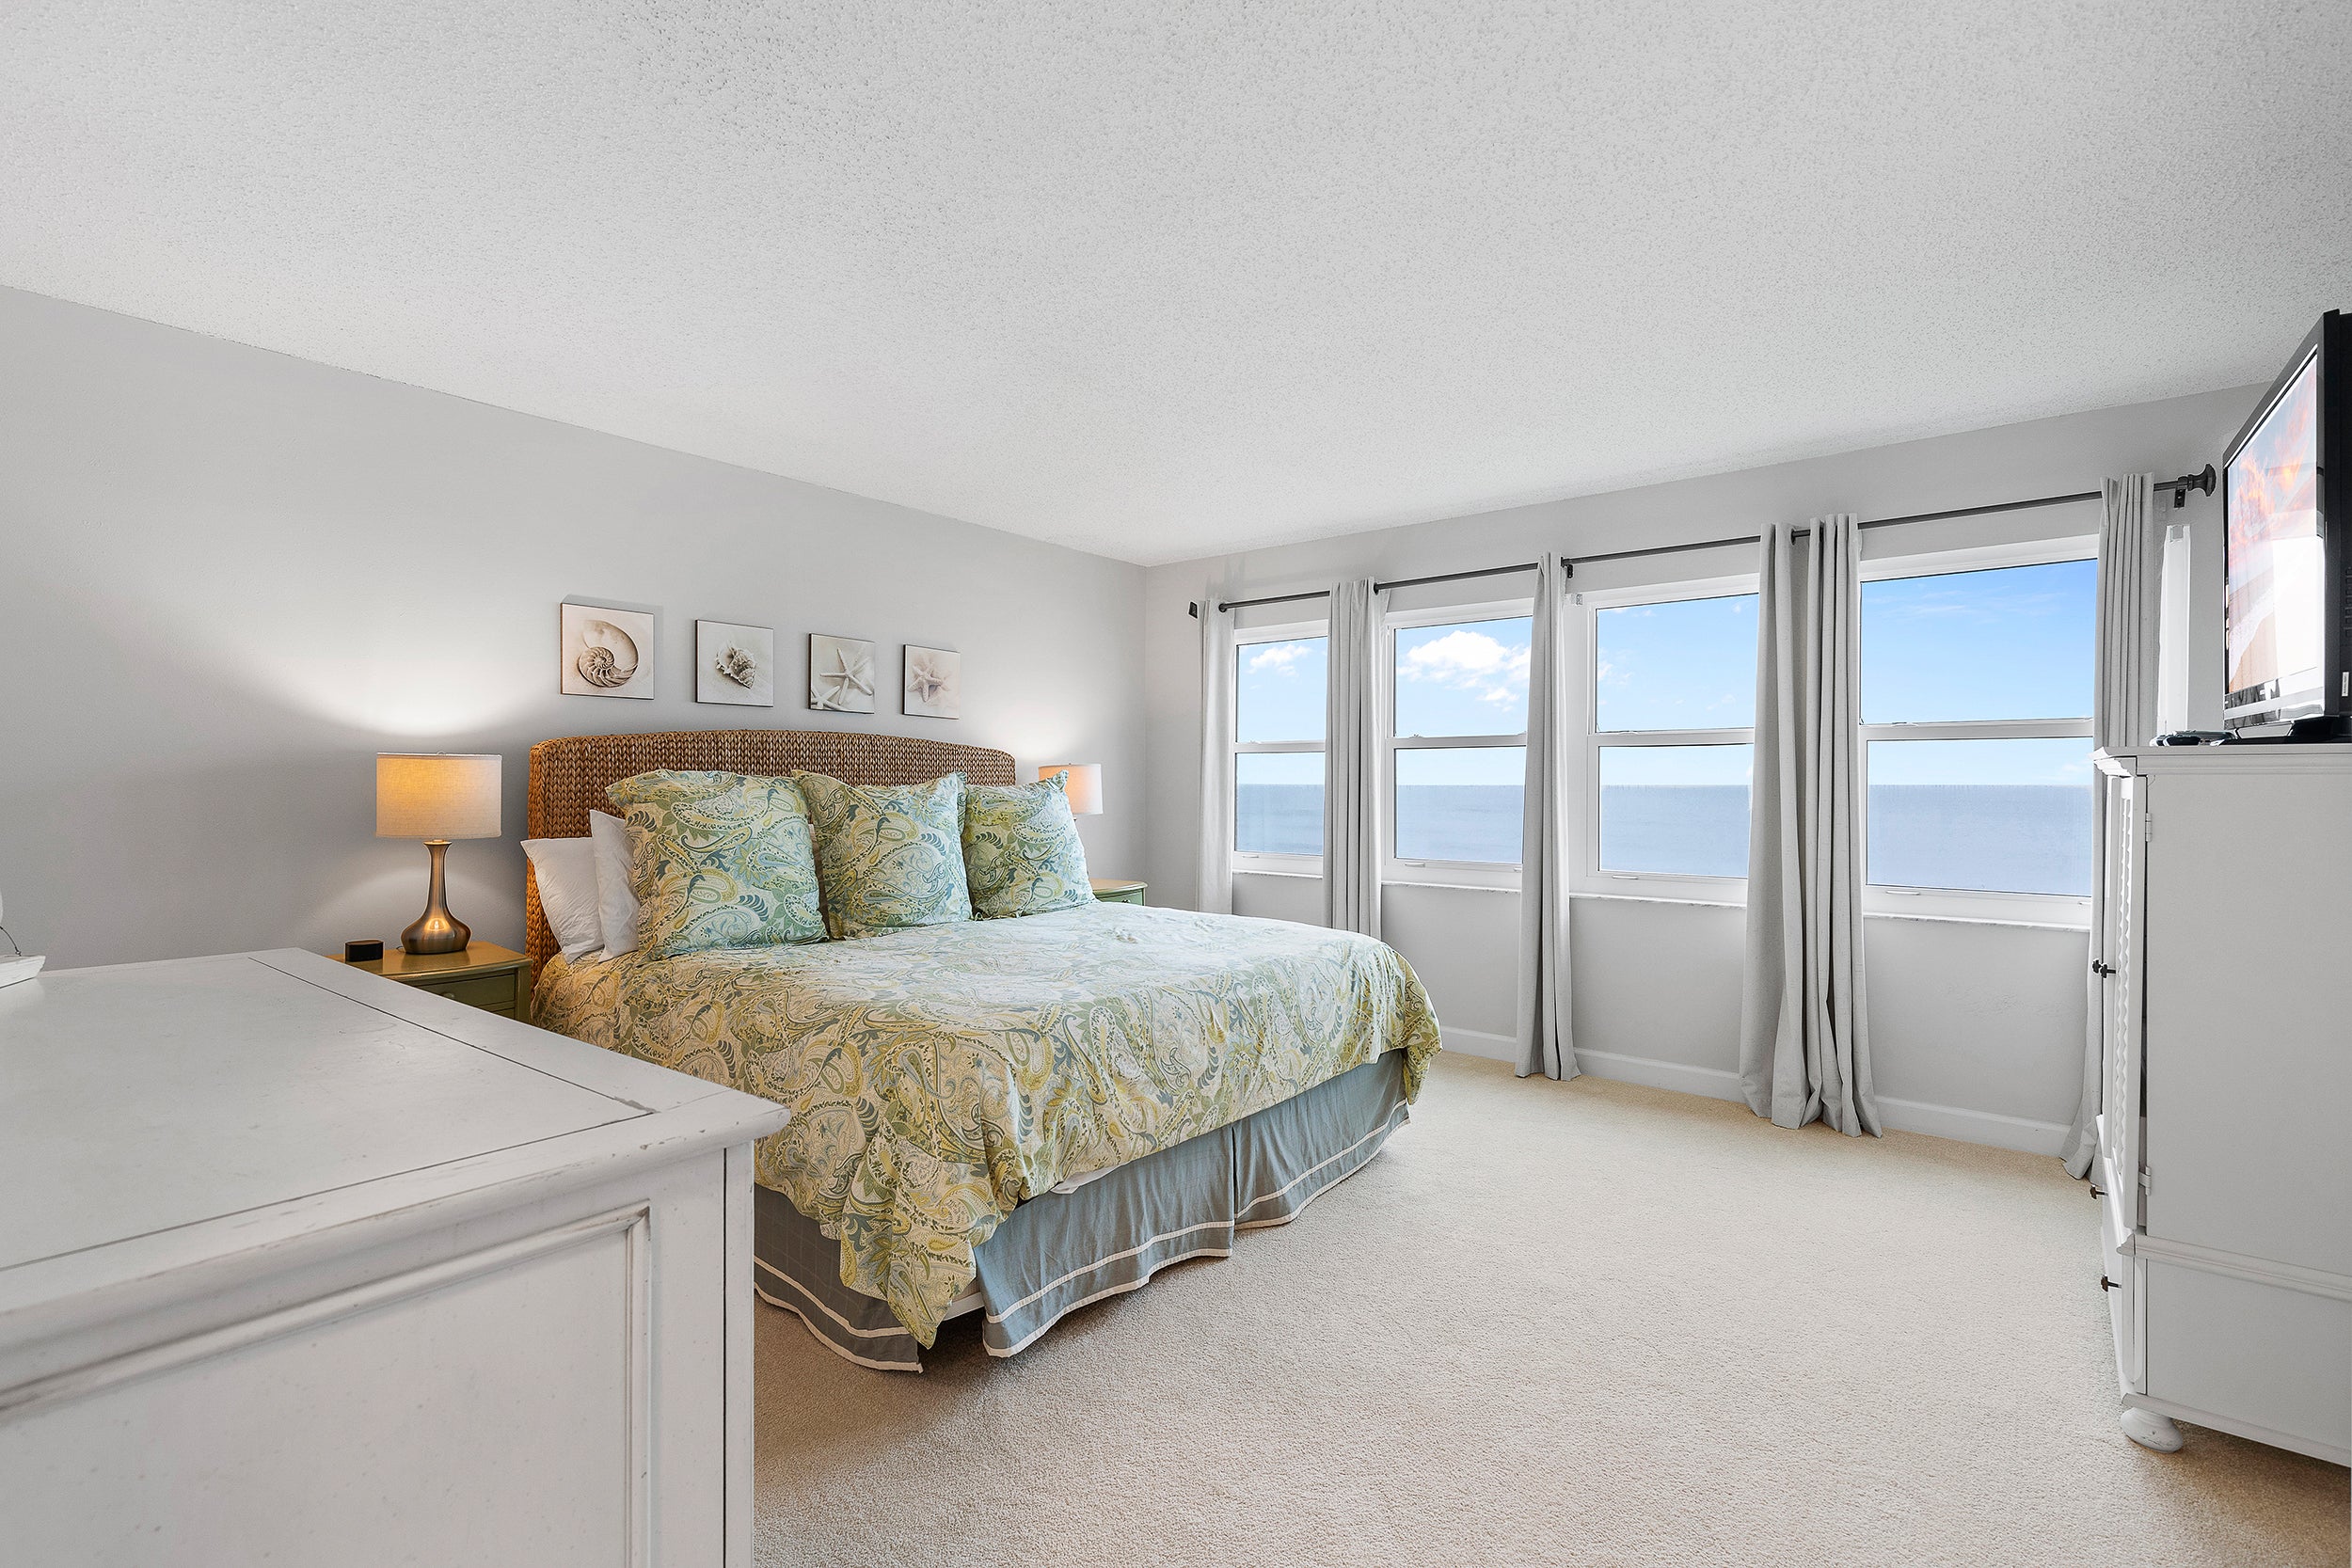 Spacious primary bedroom with ocean views